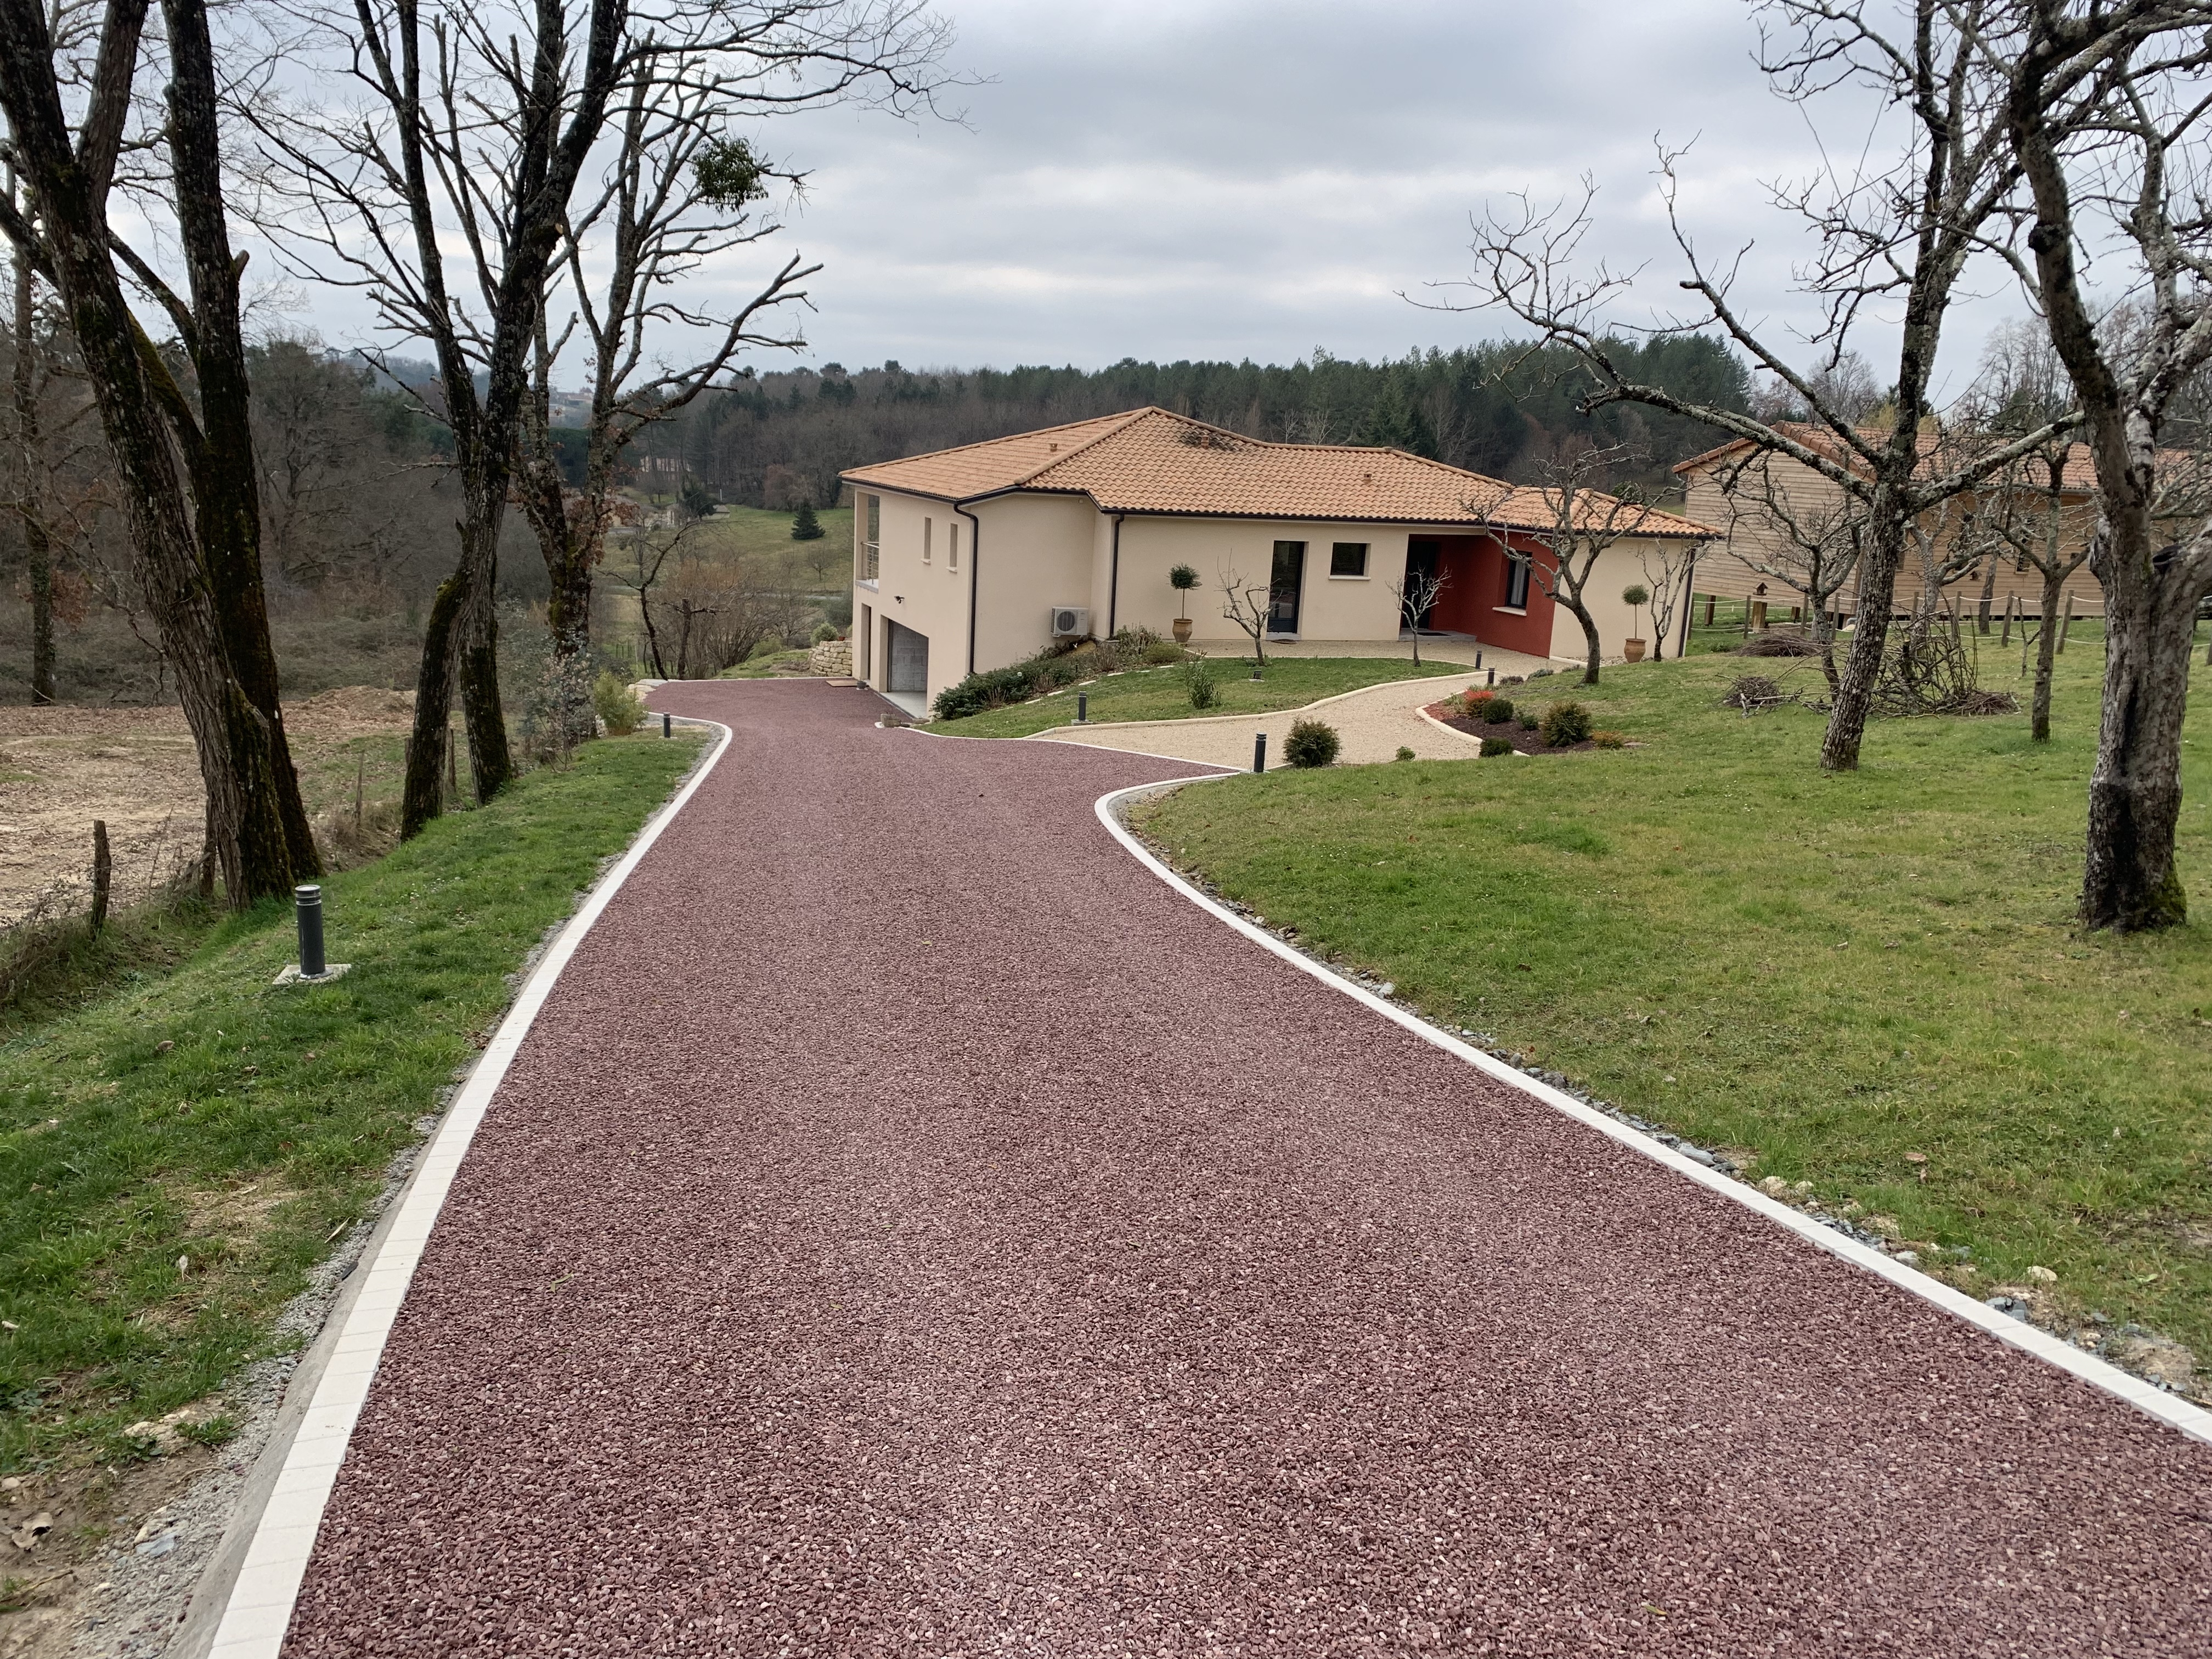 Conception Chemin en Alvostar et Gravistar - Dordogne cre le 18/05/2021